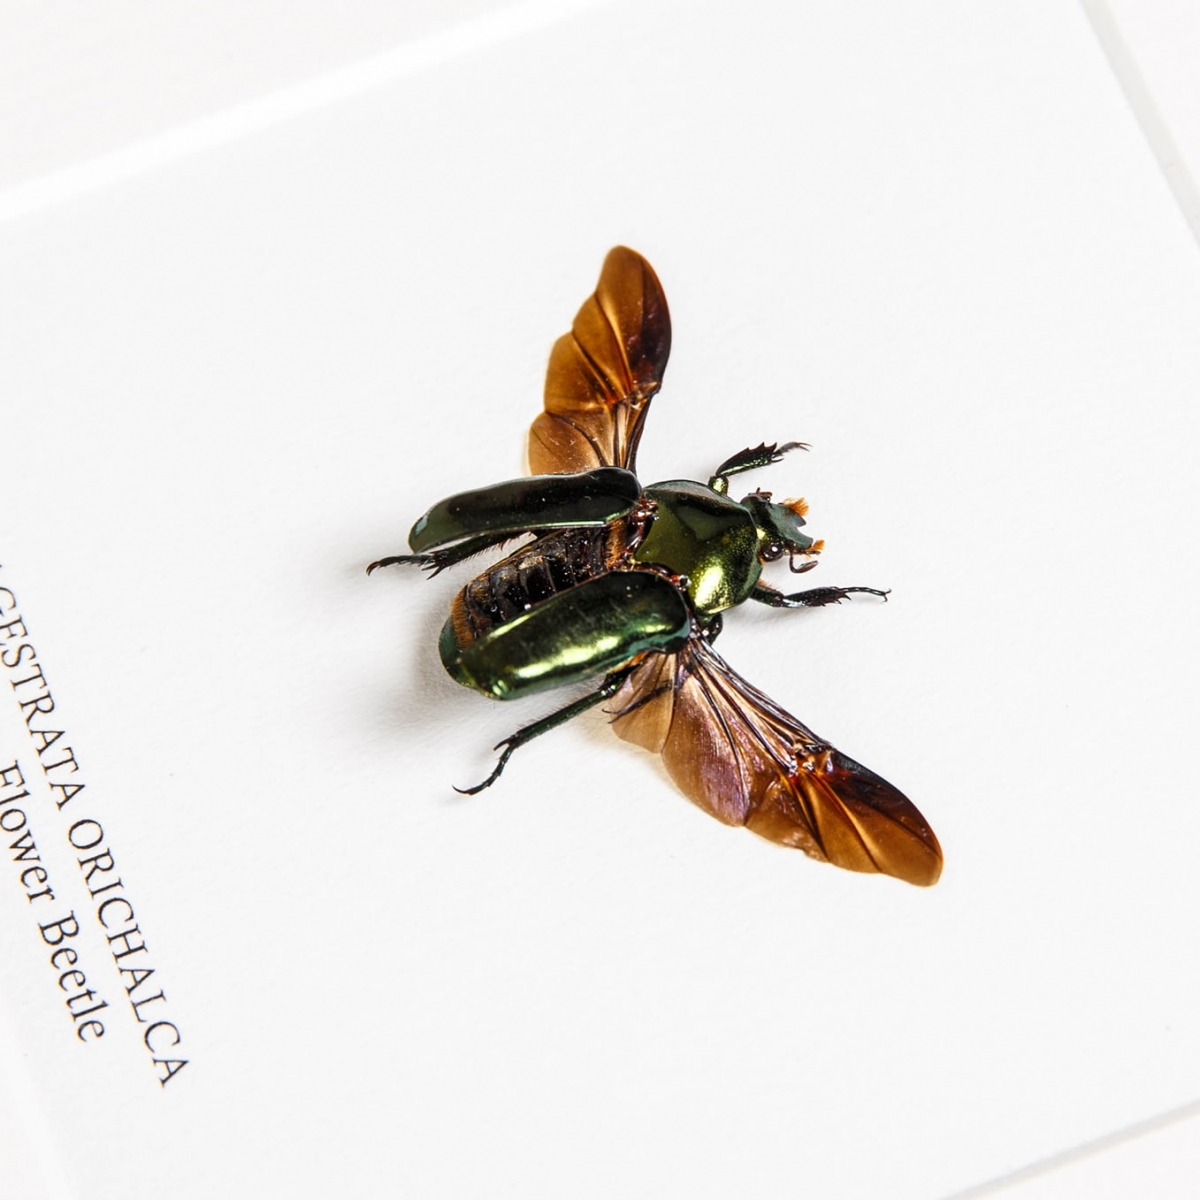 Asian Flower Beetle In Box Frame (Agestrata orichalca)